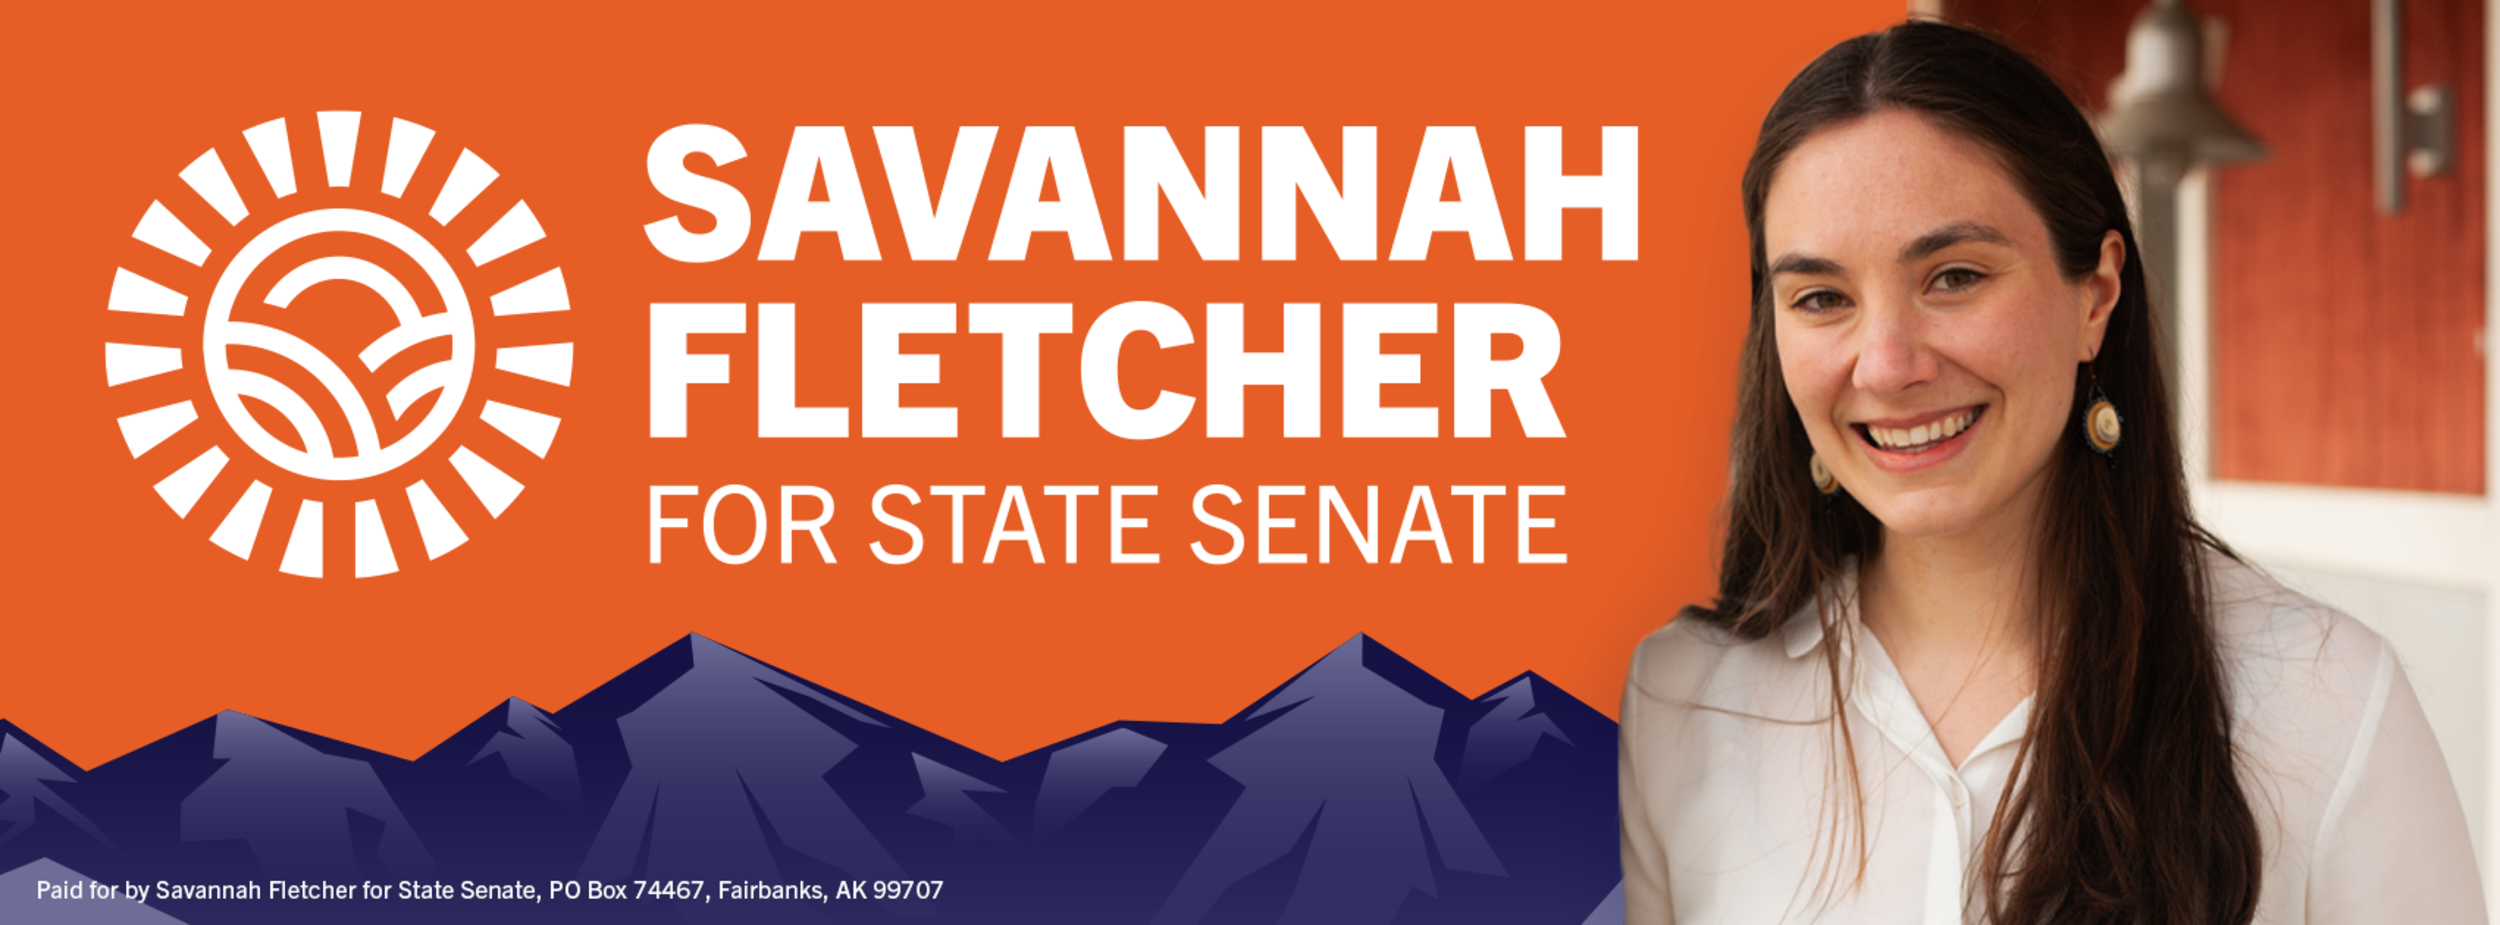 Savannah Fletcher for Senate with sun logo